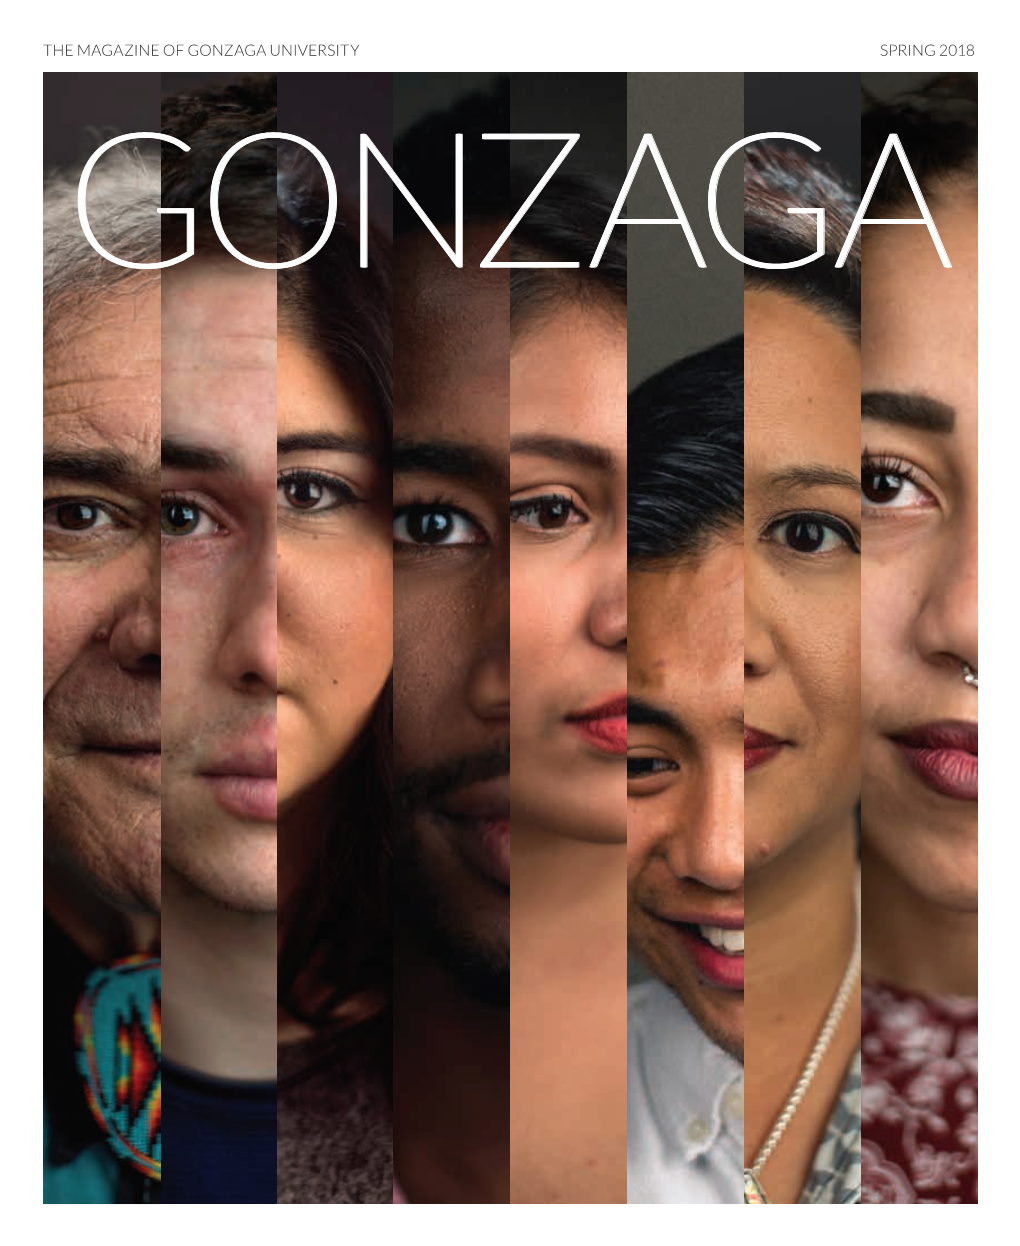 Gonzaga Magazine SPRING 2018.FINAL.Indd